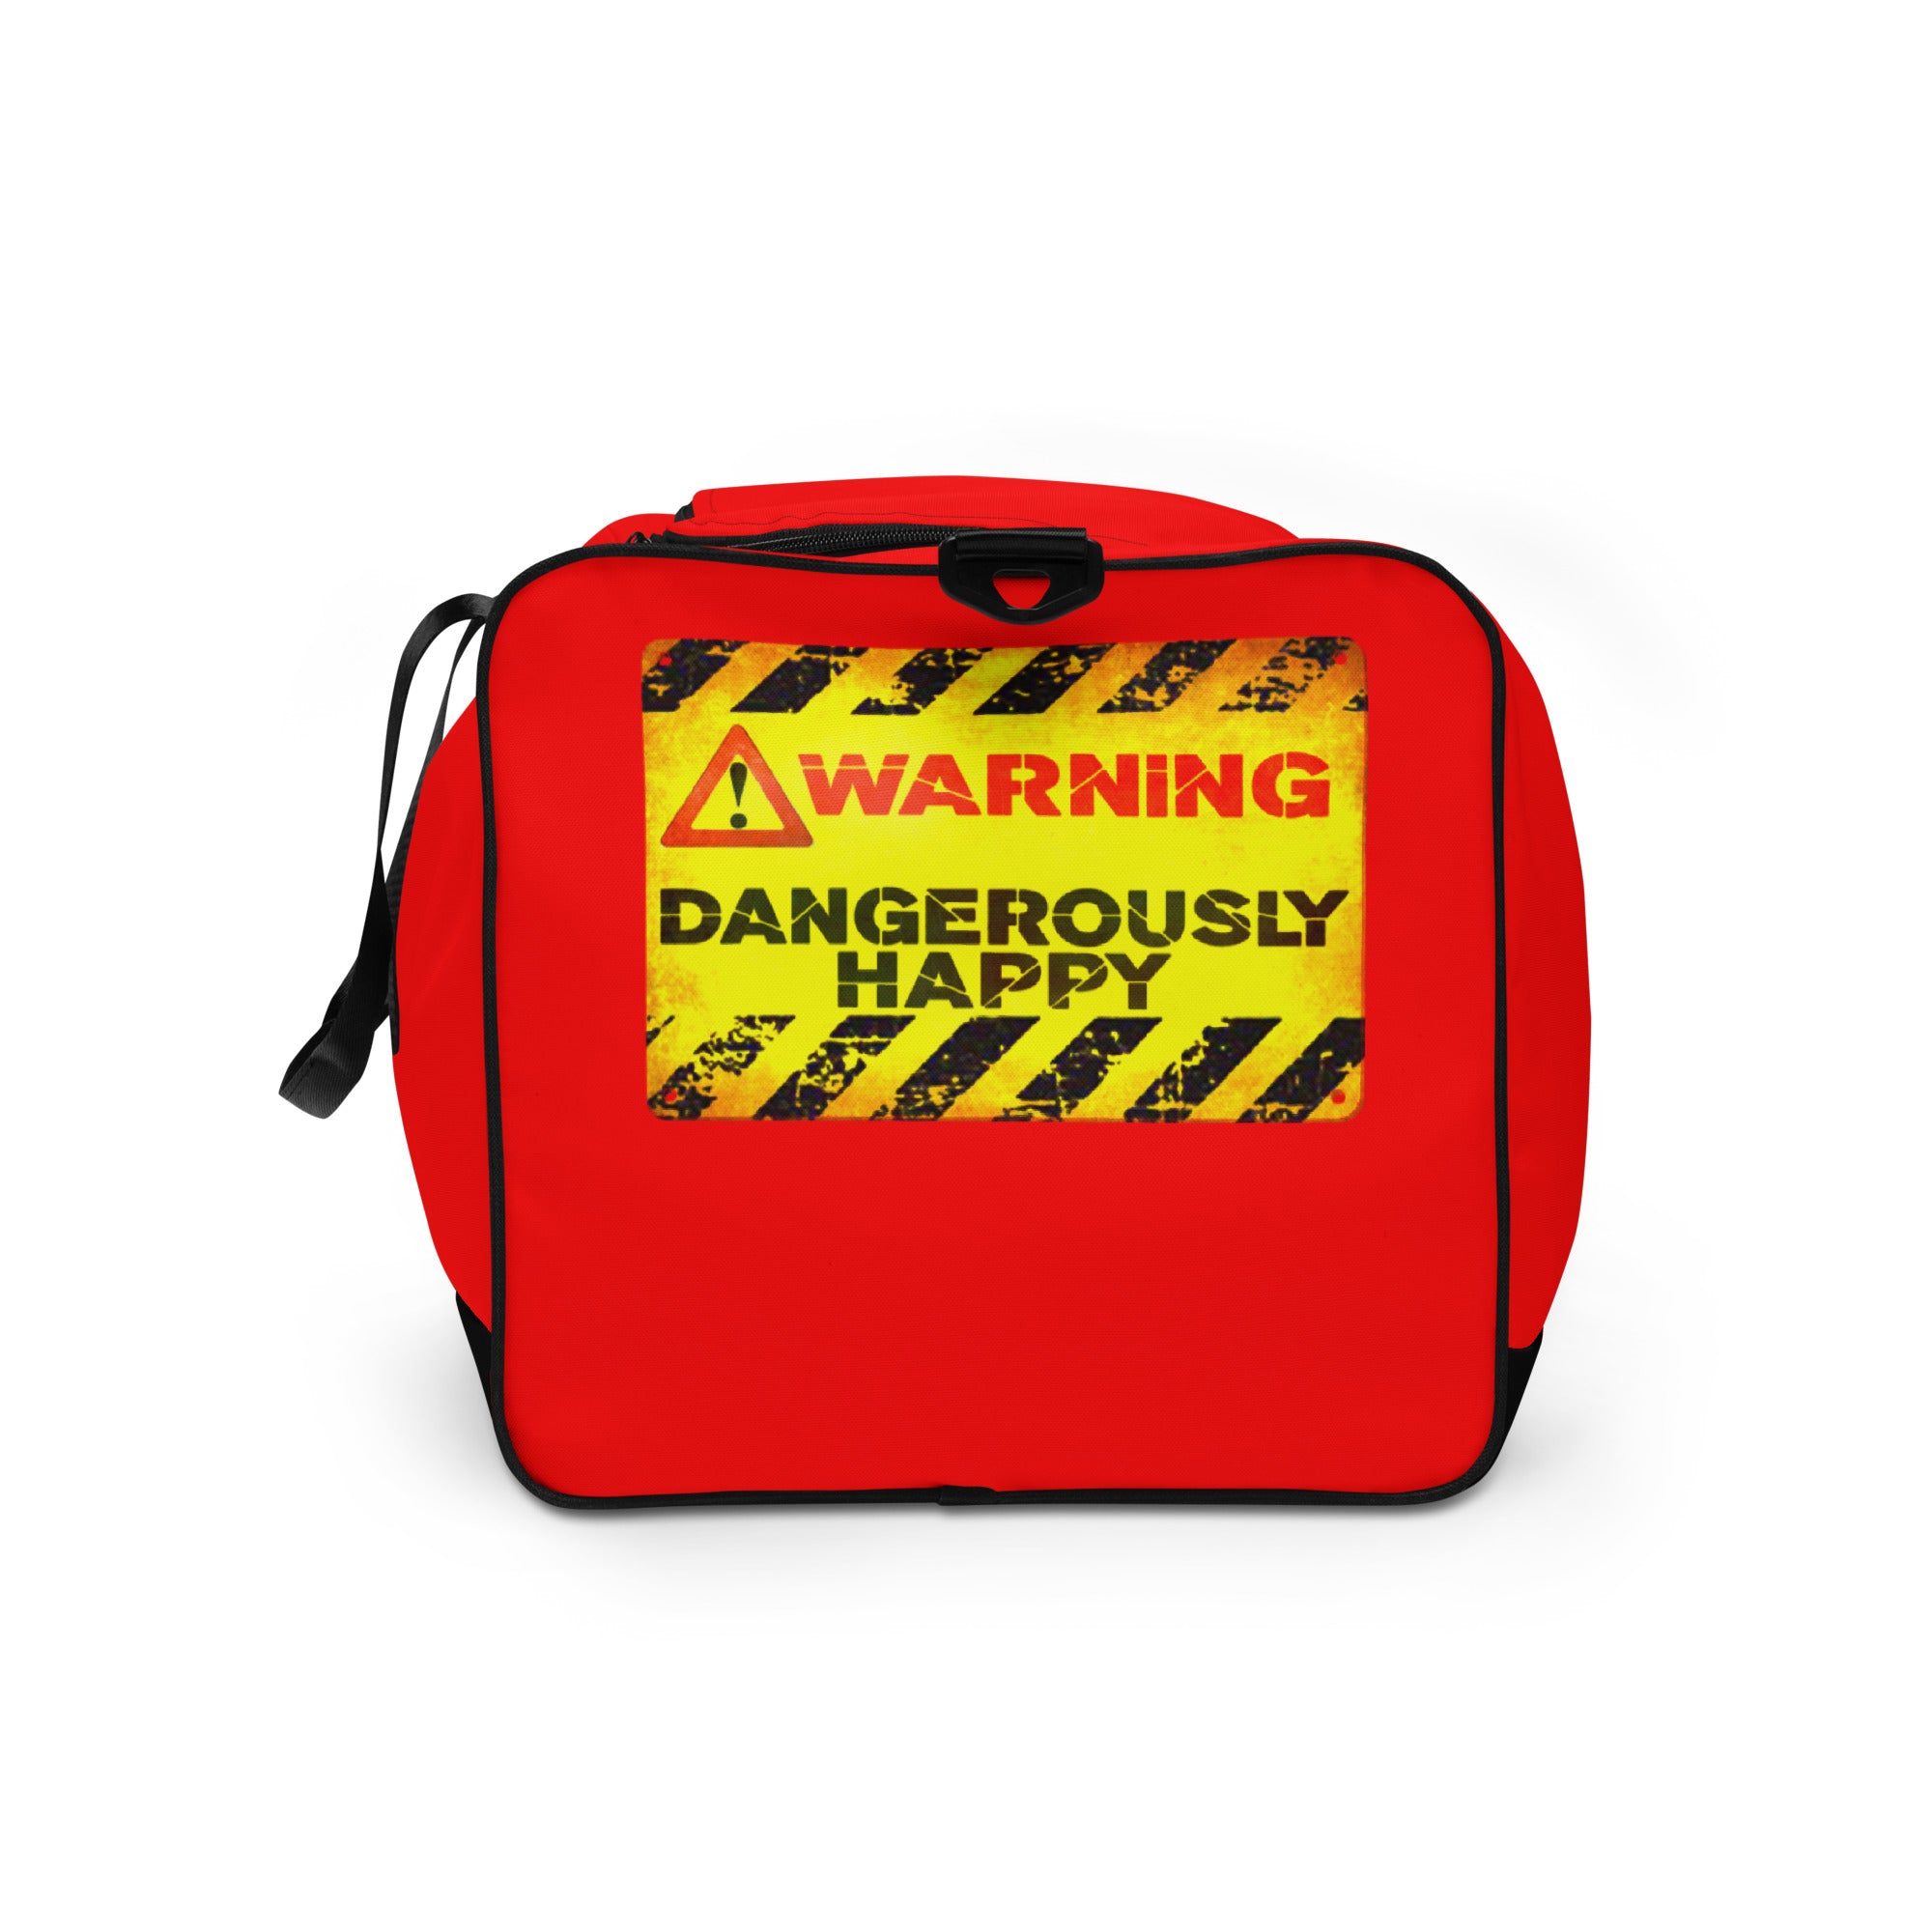 Warning Dangerously Happy Duffle bag